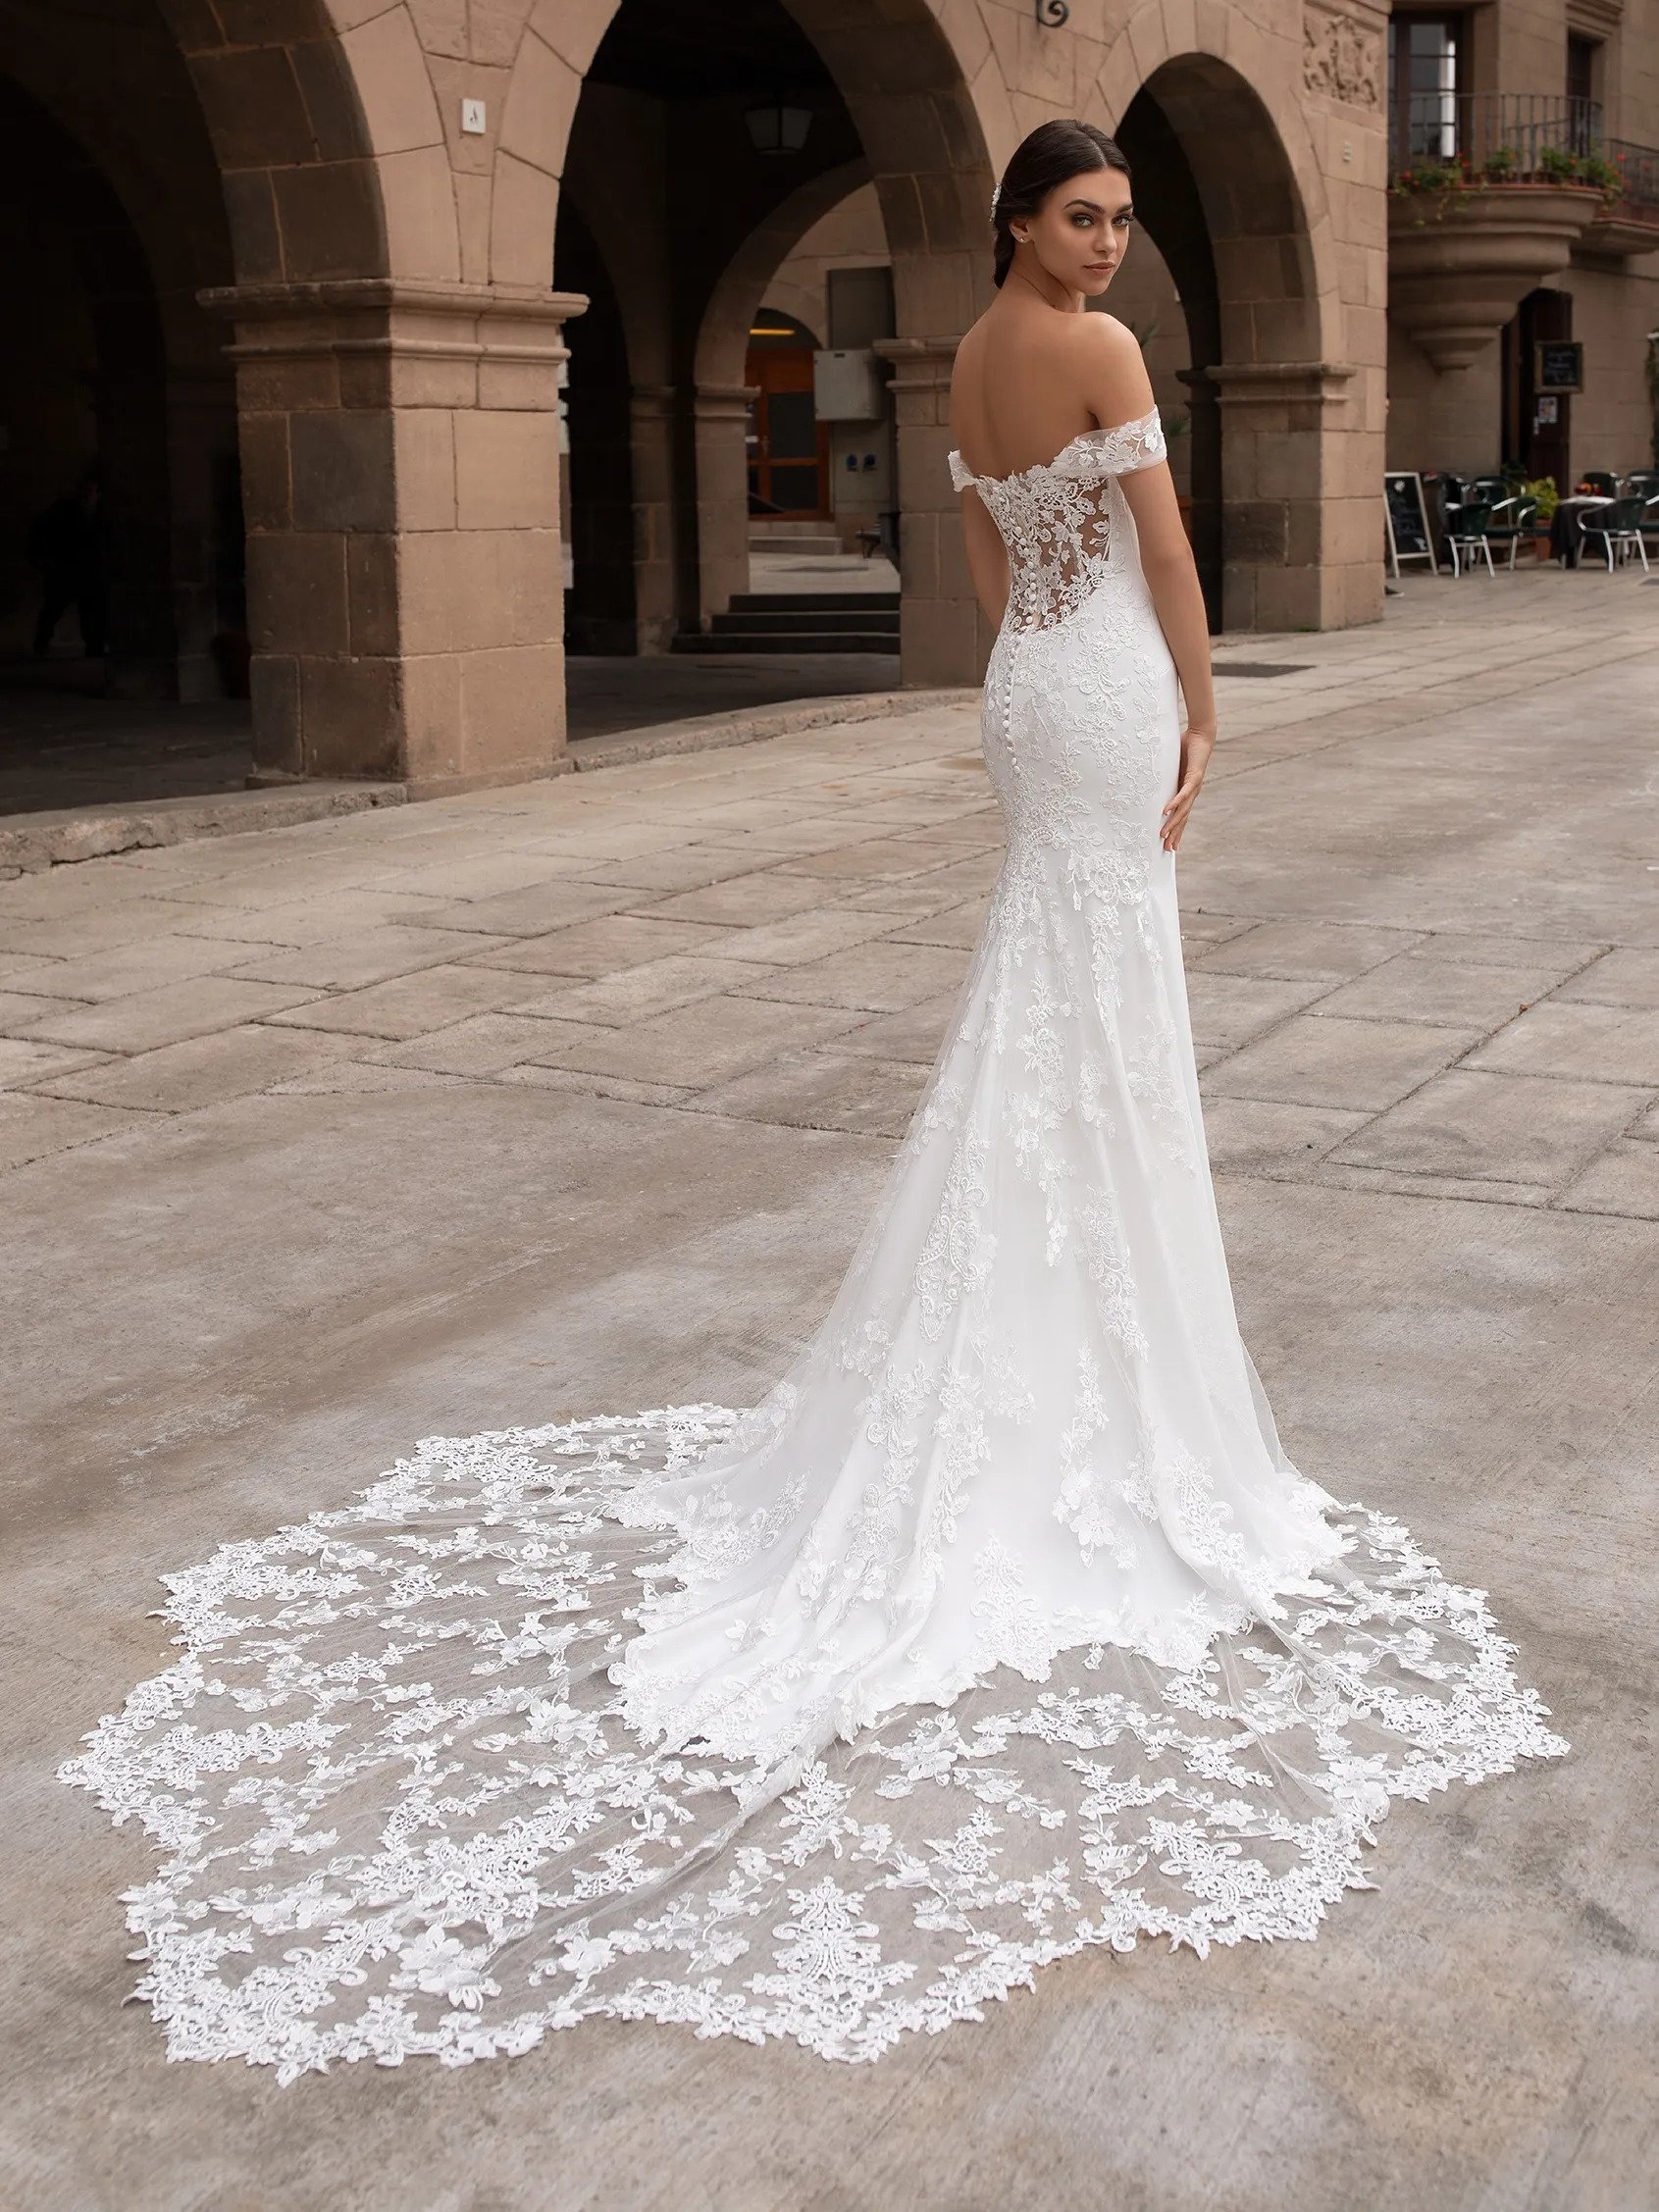 blanc-de-blanc-bridal-boutique-pittsburgh-dress-wedding-gown-syrinx.jpg